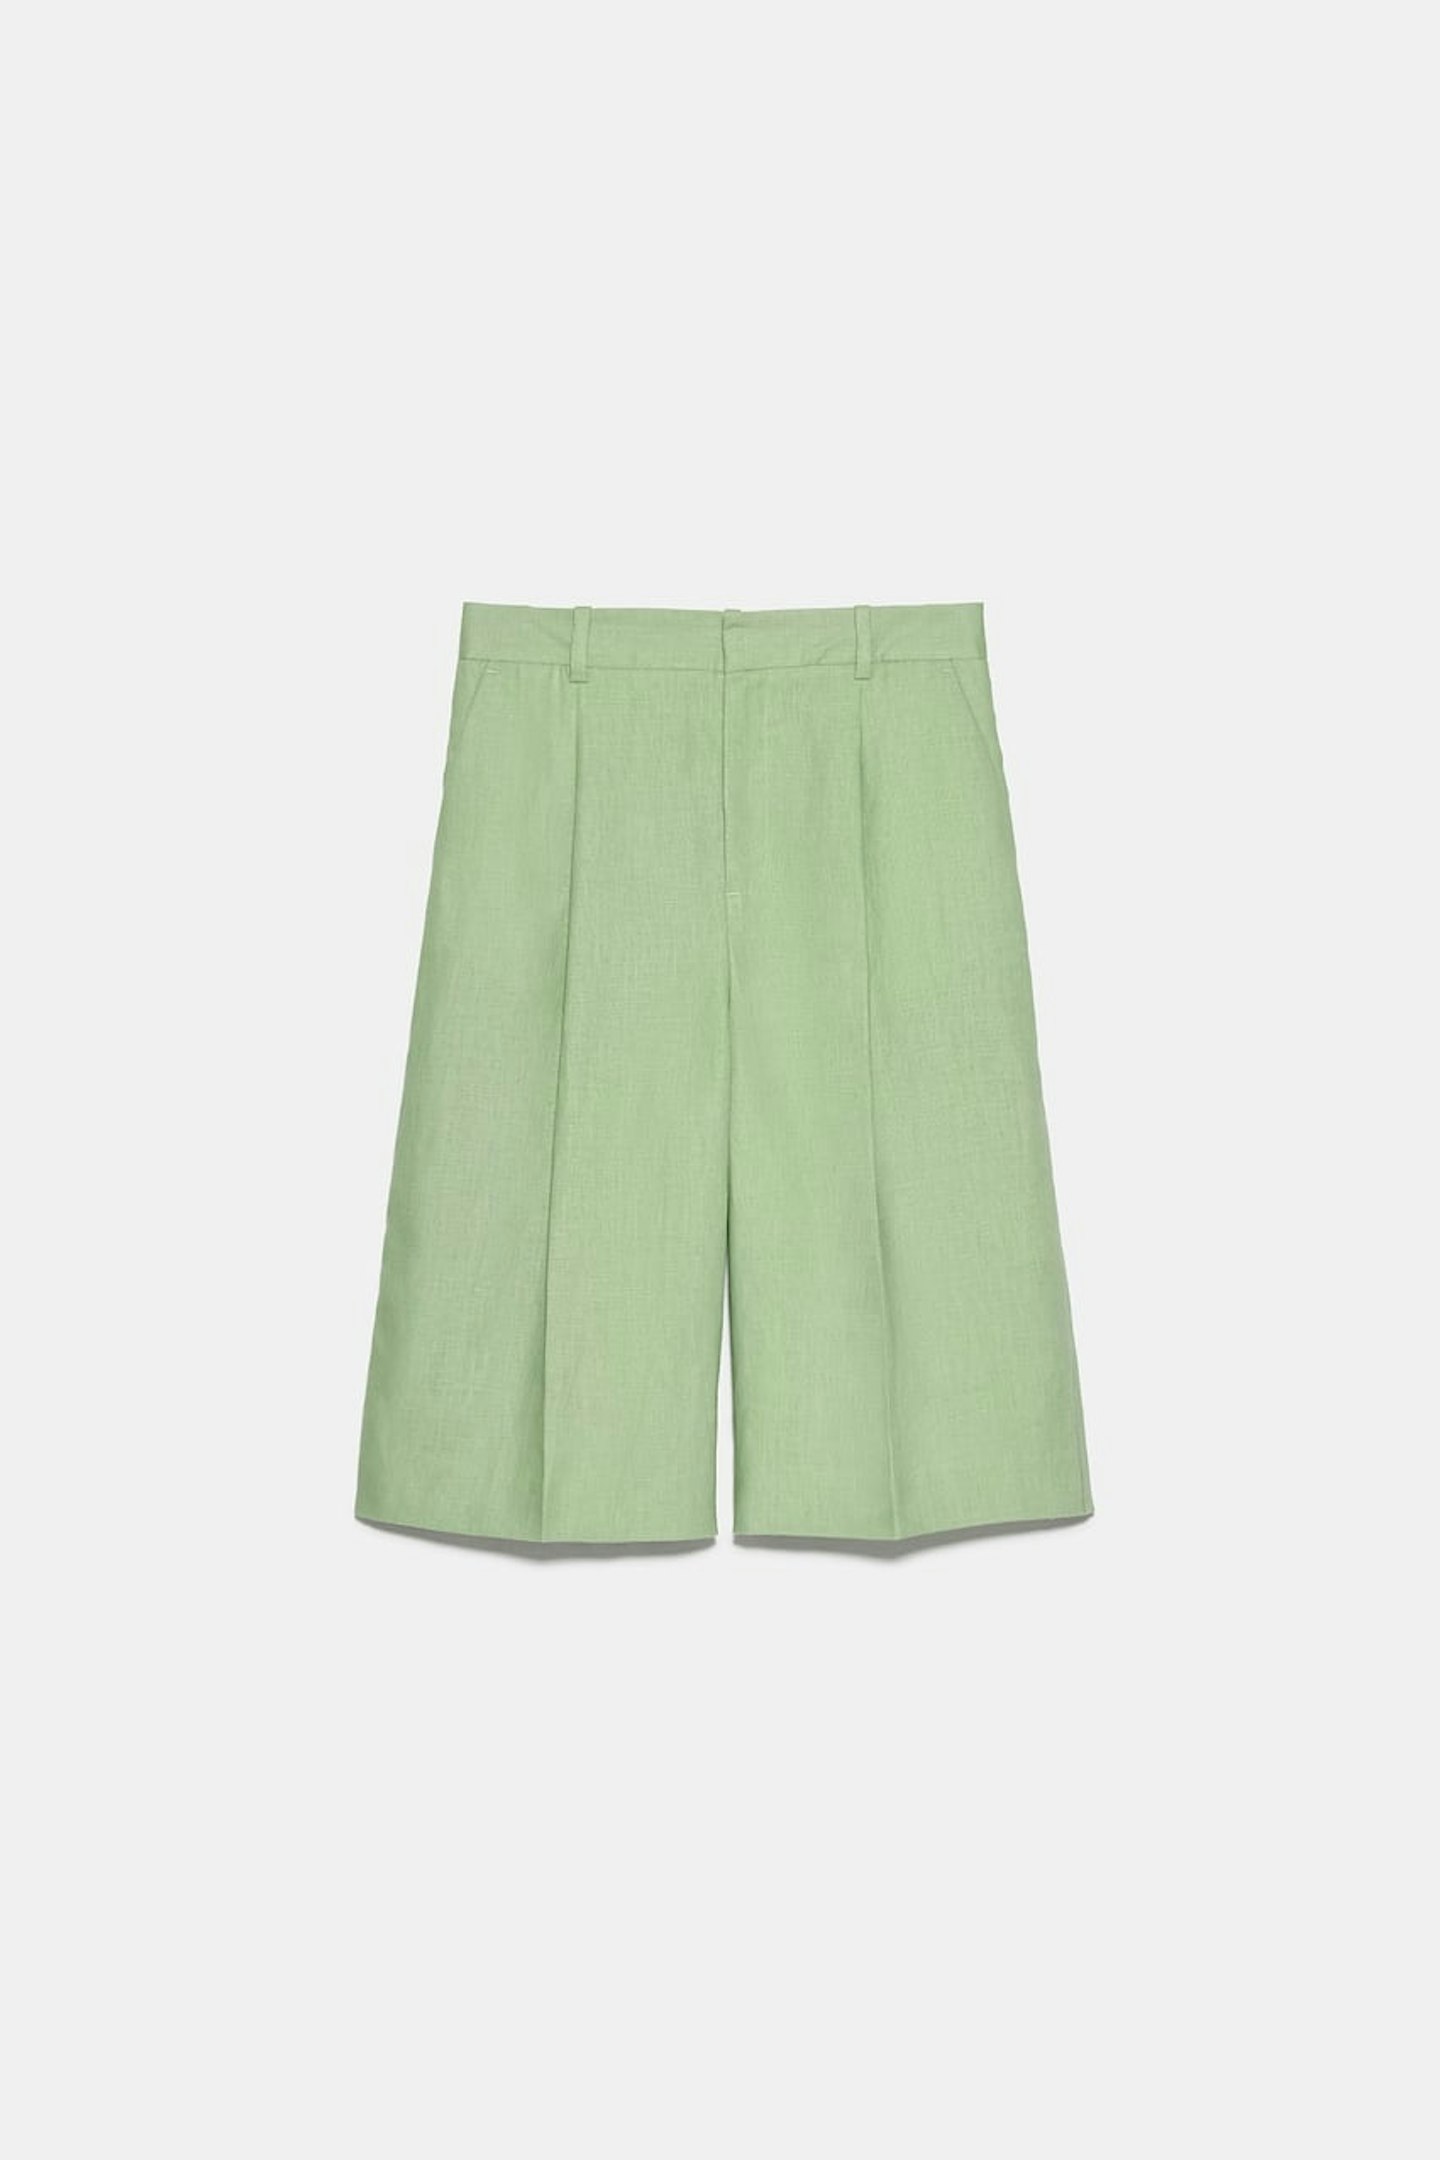 Zara, Linen Bermuda Shorts, £25.99